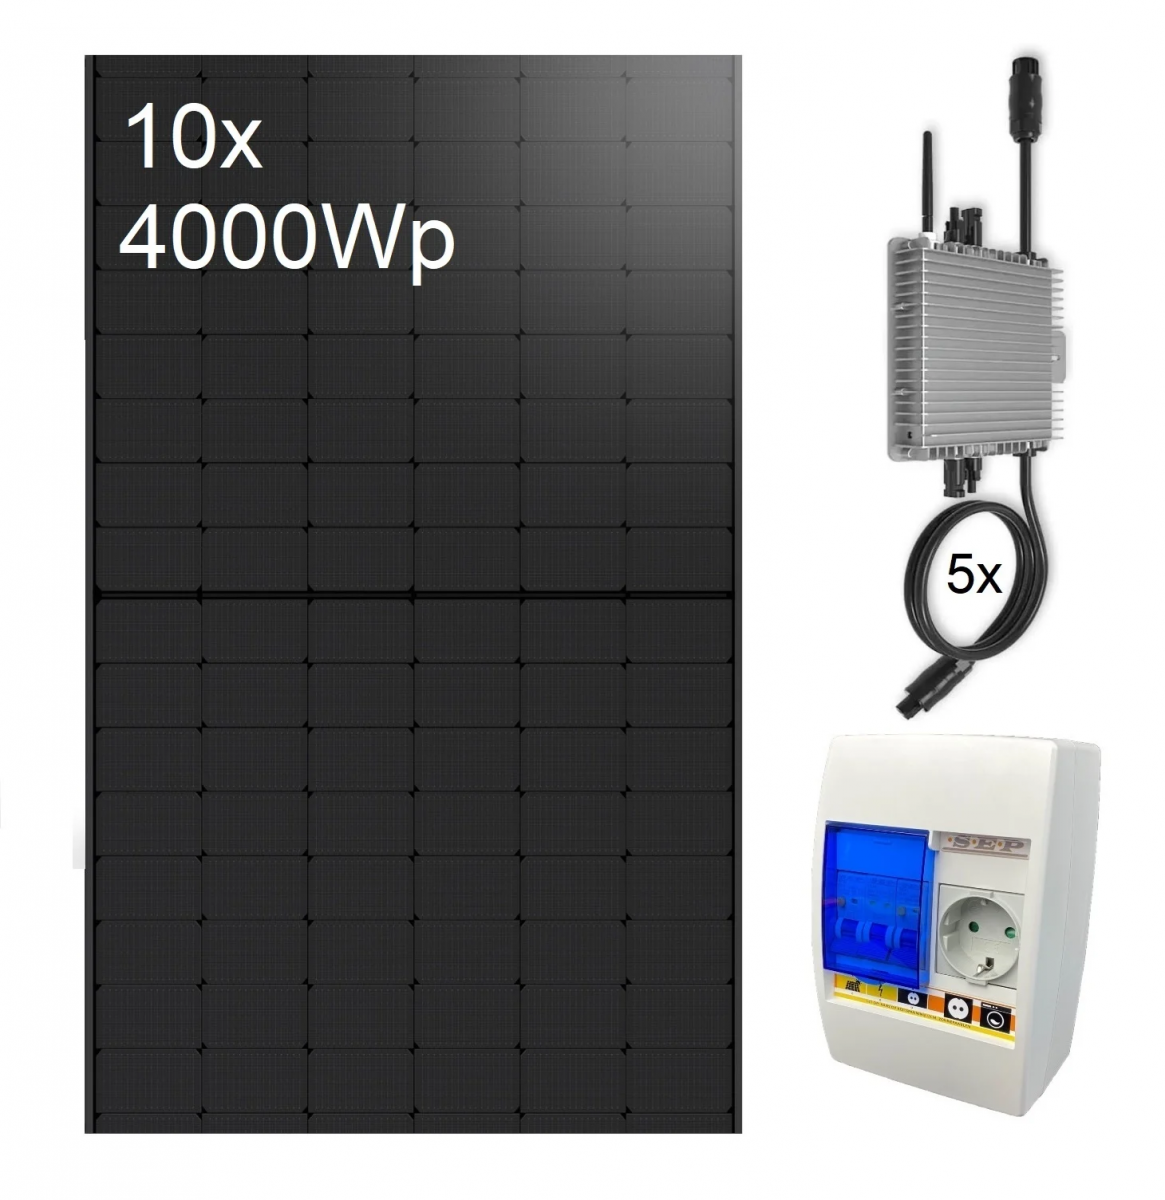 Plug and play zonnepanelen - 5x600w omvormer met 10x 400Wp